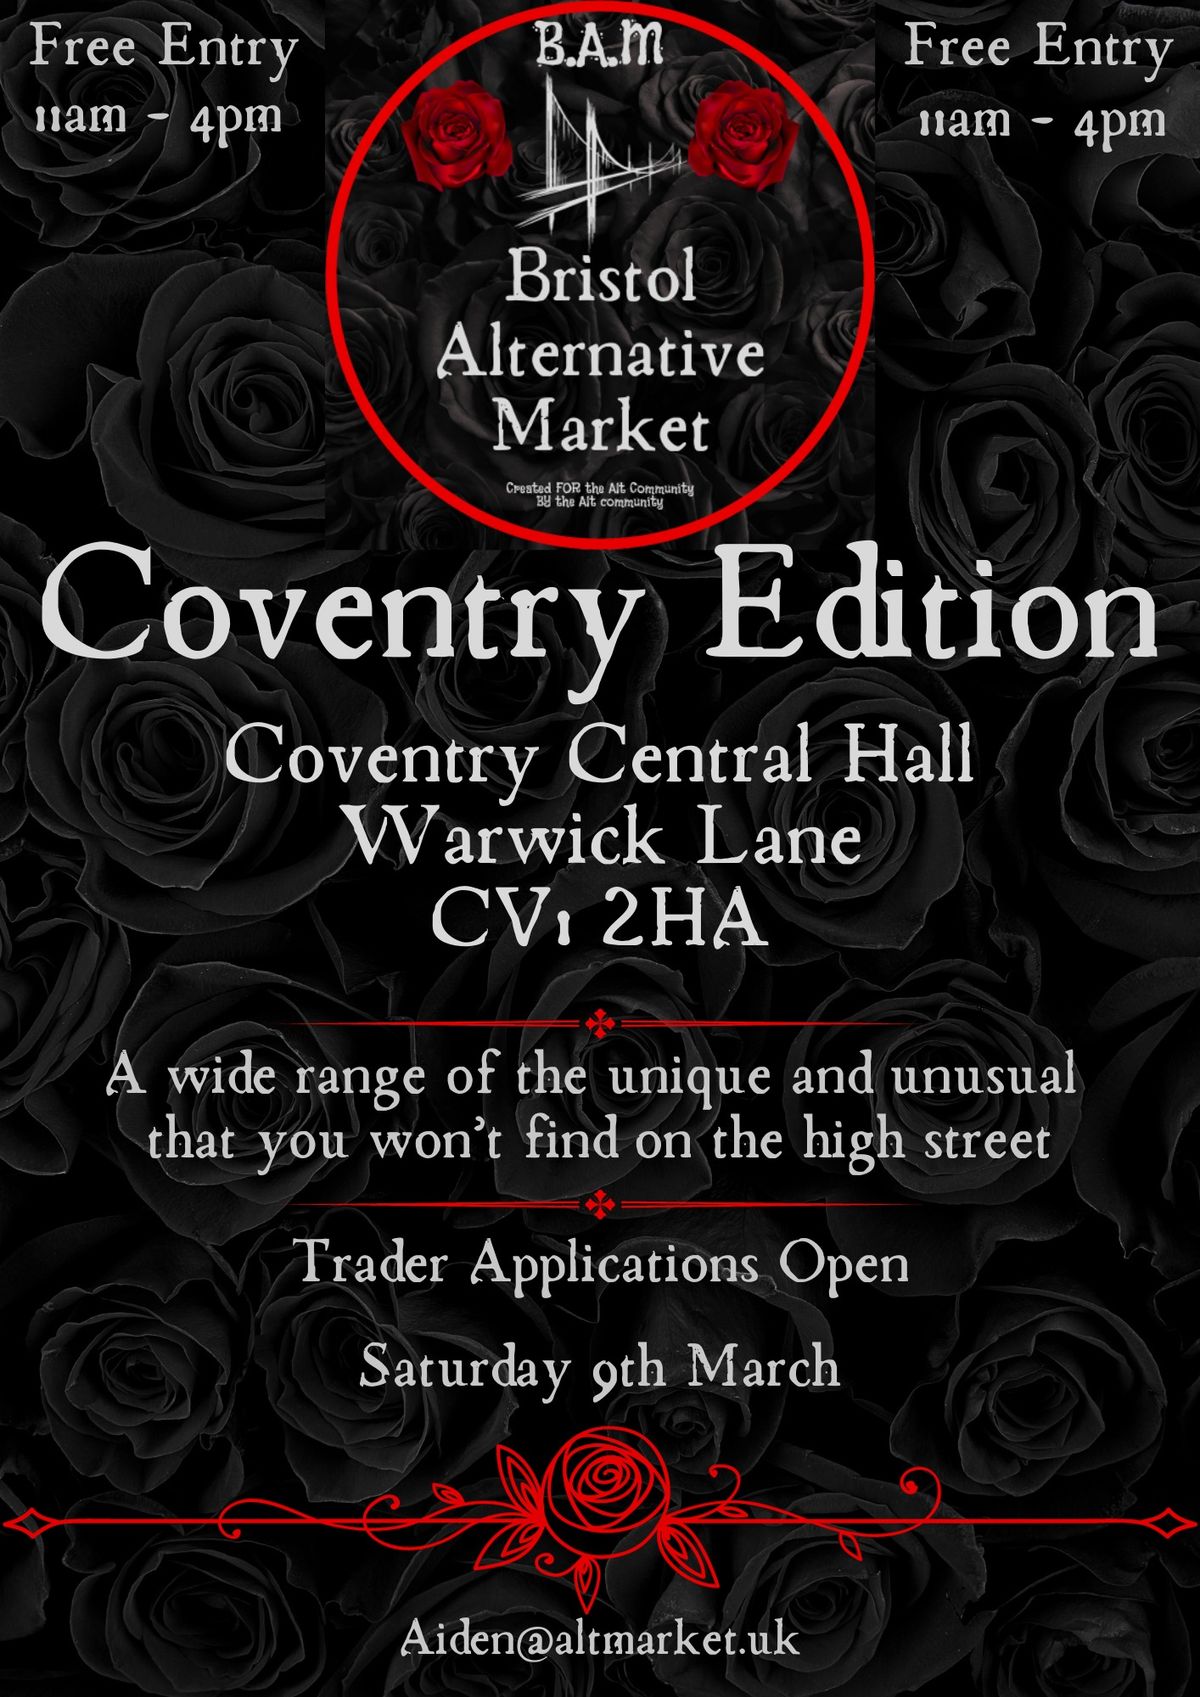 Coventry Edition of Bristol Alternative Market (BAM)